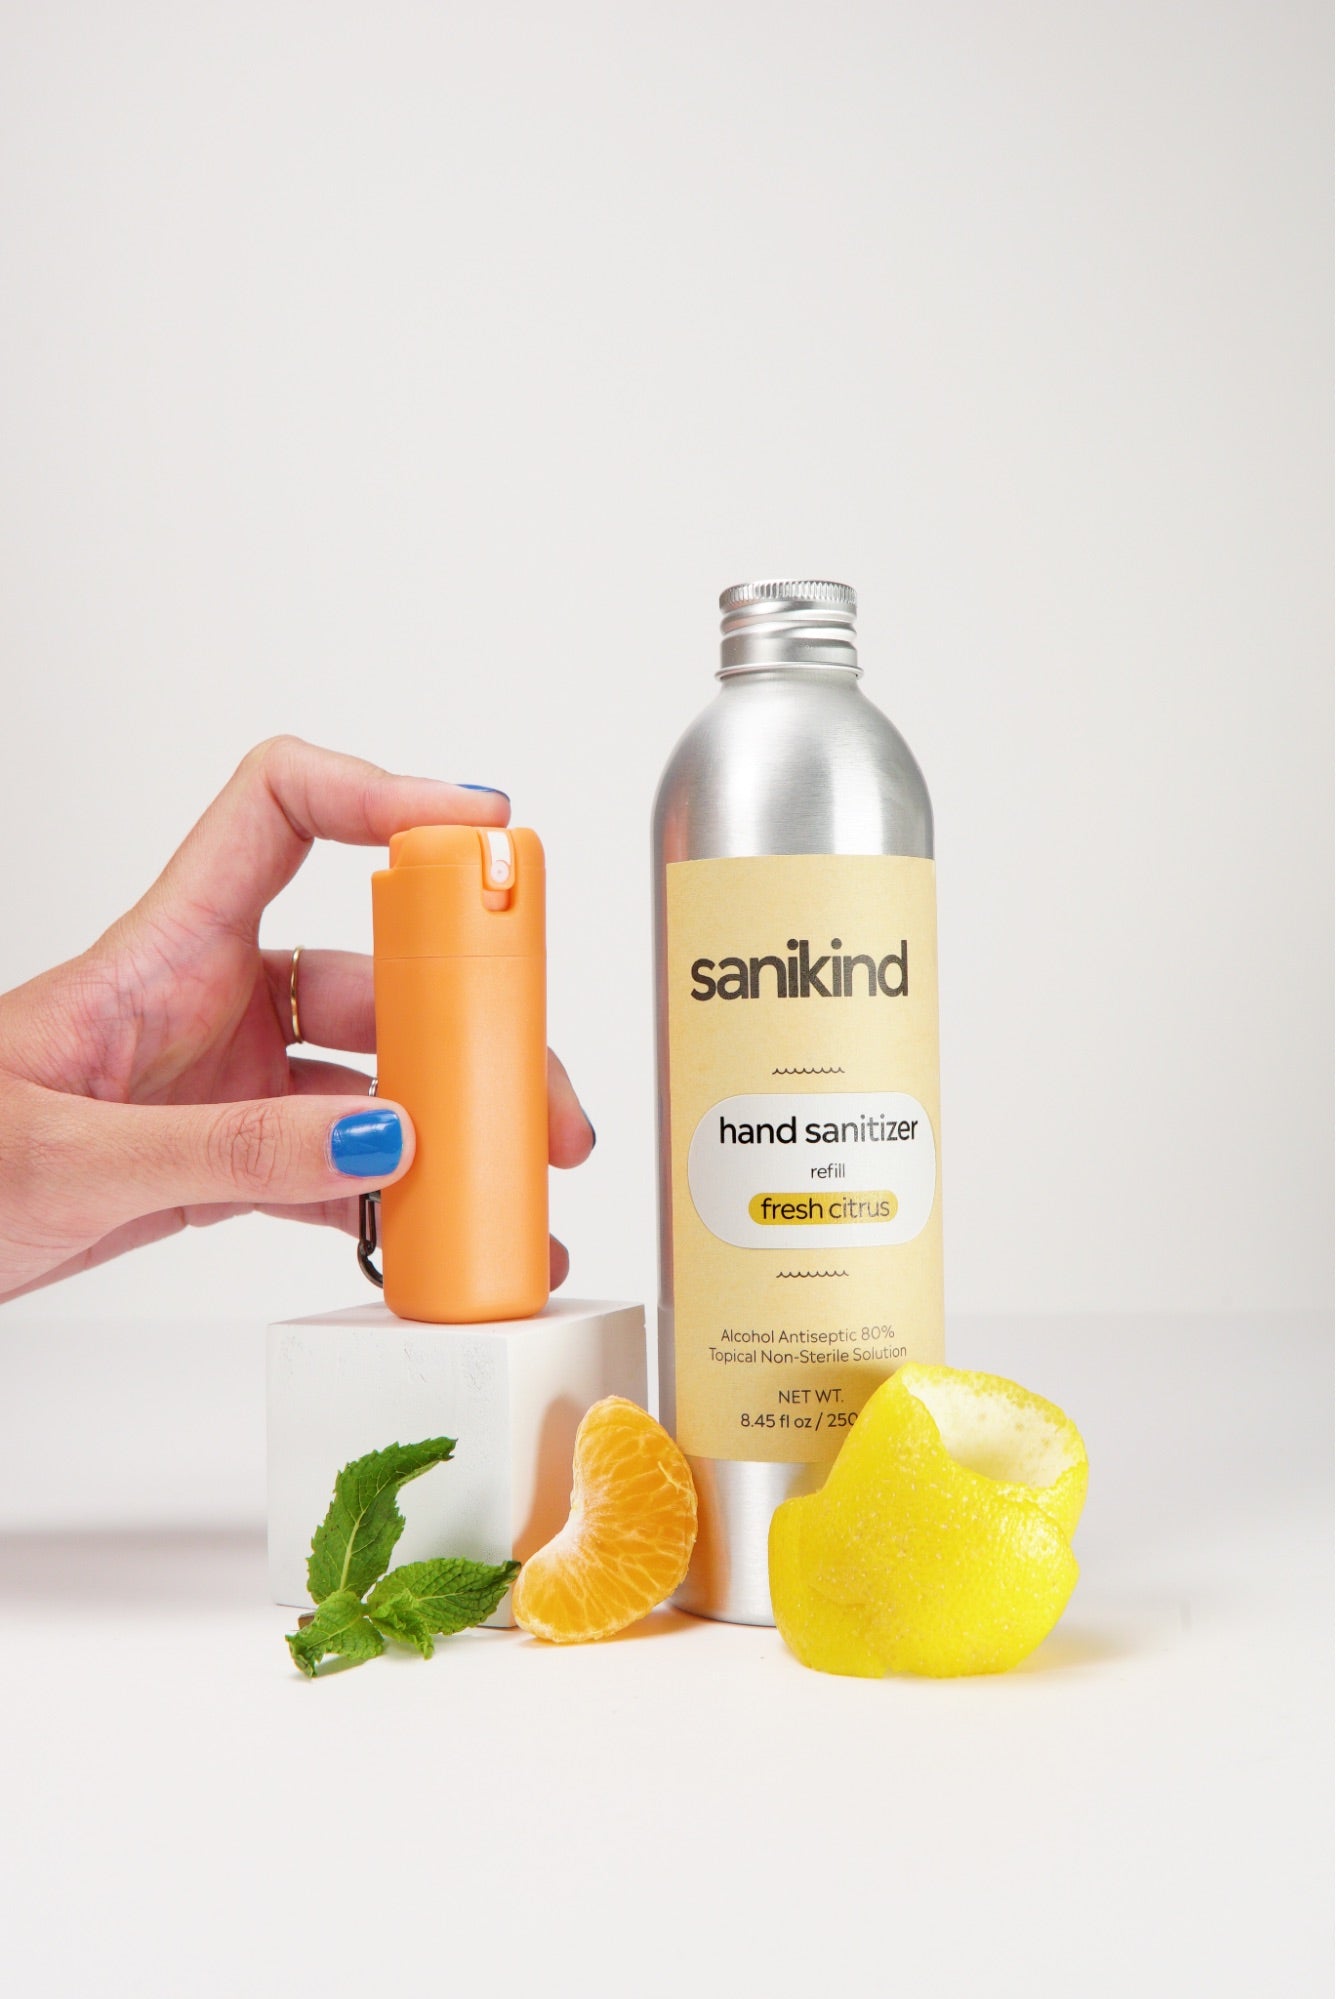 A sanitizer bottle against a white background with a hand model holding an orange Snikind dispenser.